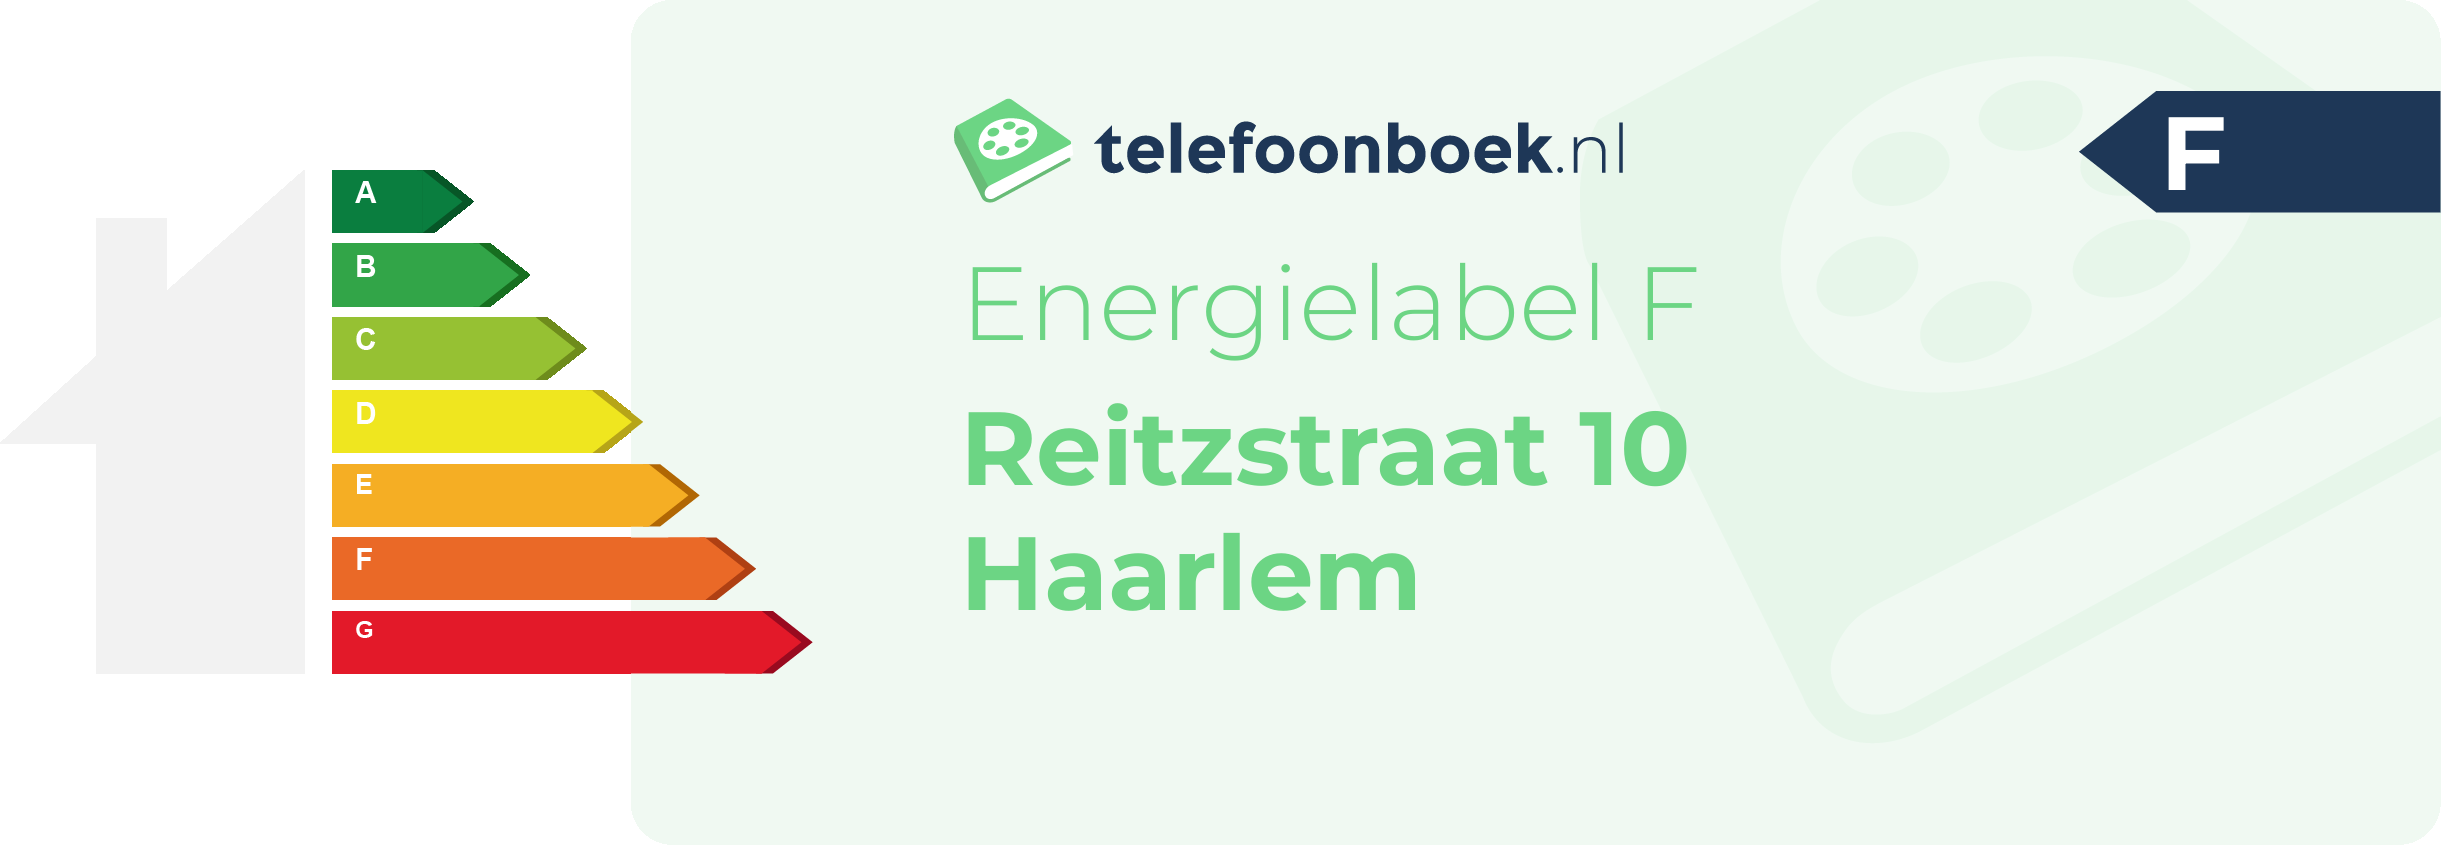 Energielabel Reitzstraat 10 Haarlem